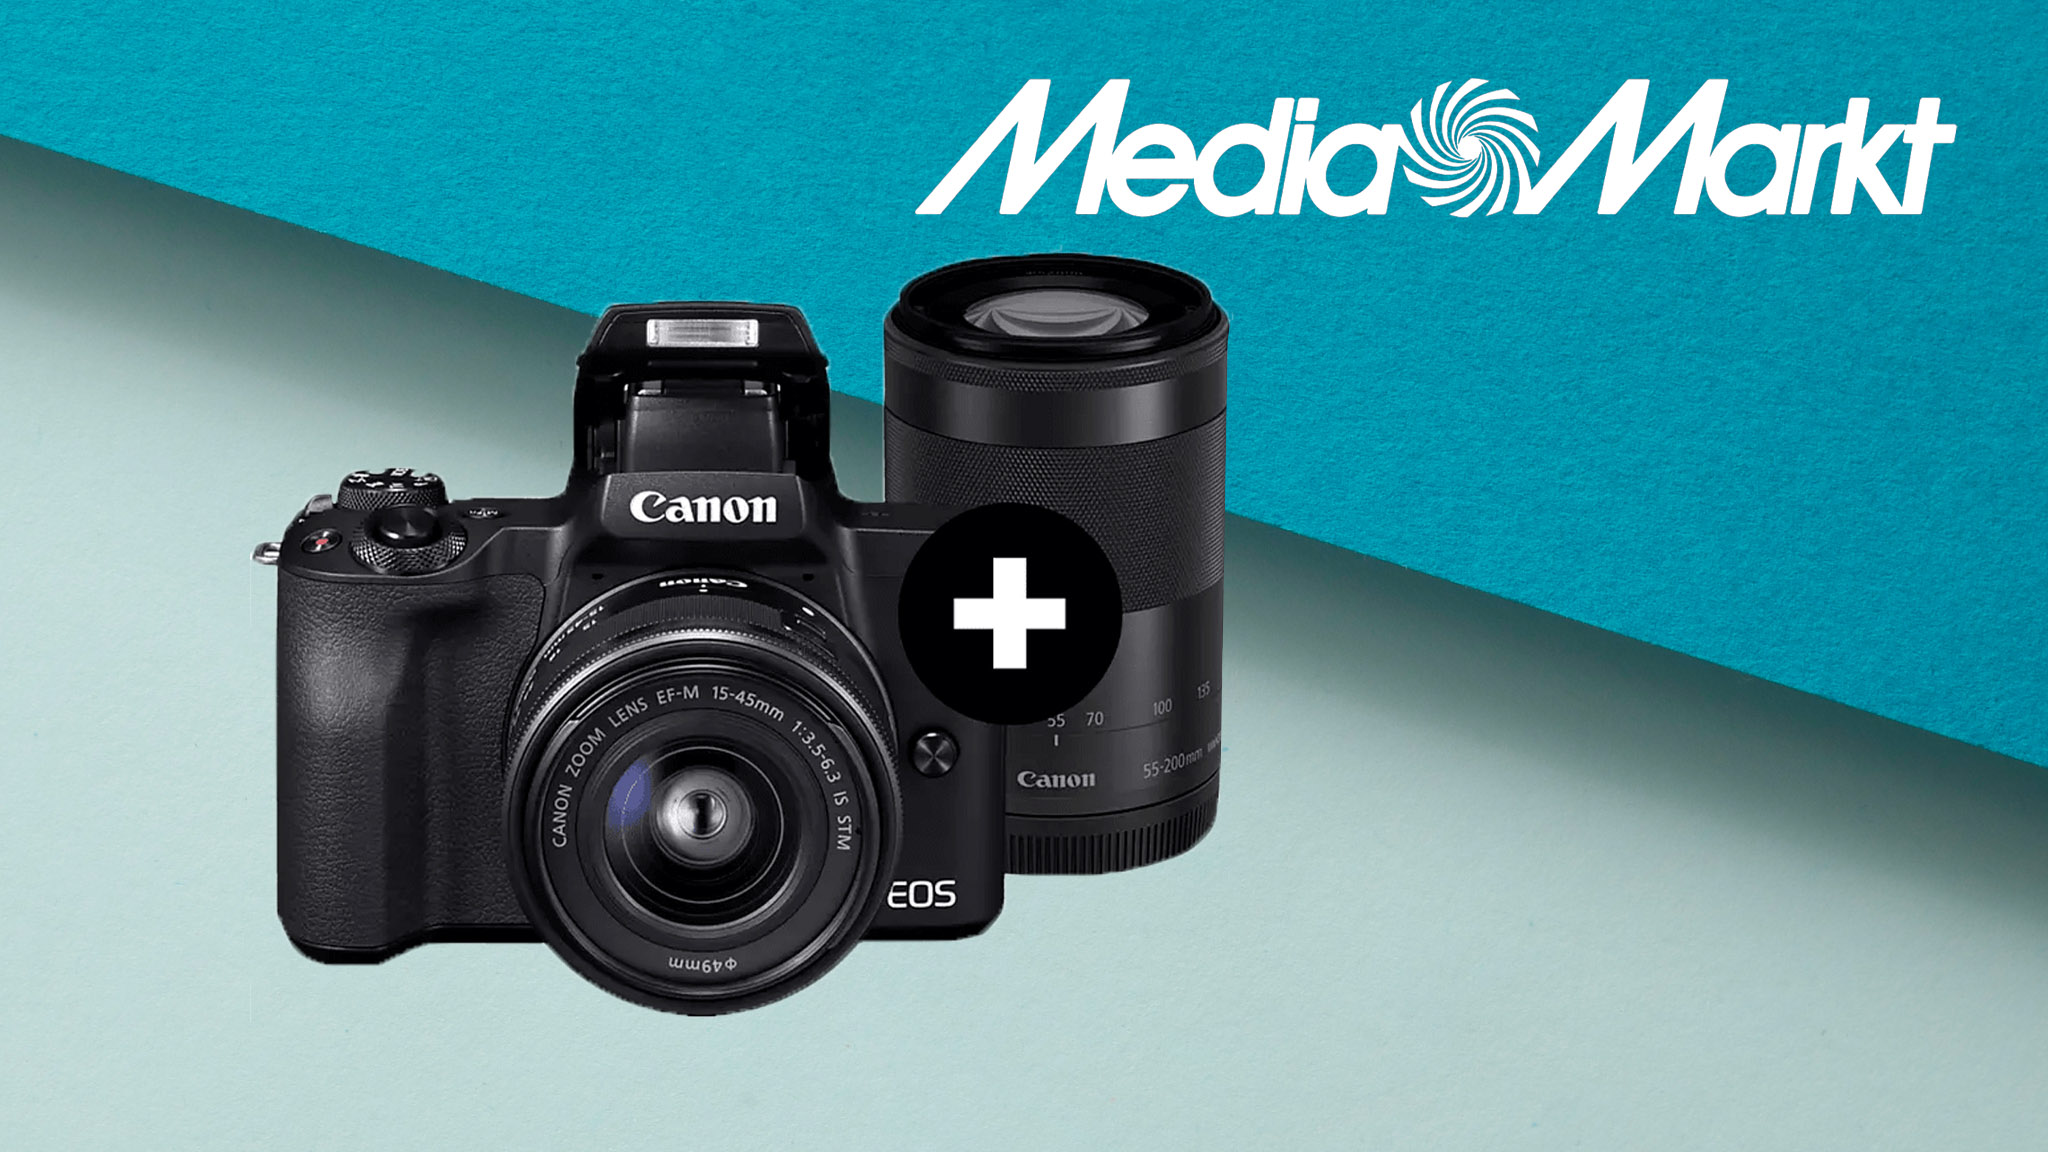 Kamera-Angebot bei Media Markt: Canon-Systemkamera günstiger - COMPUTER BILD